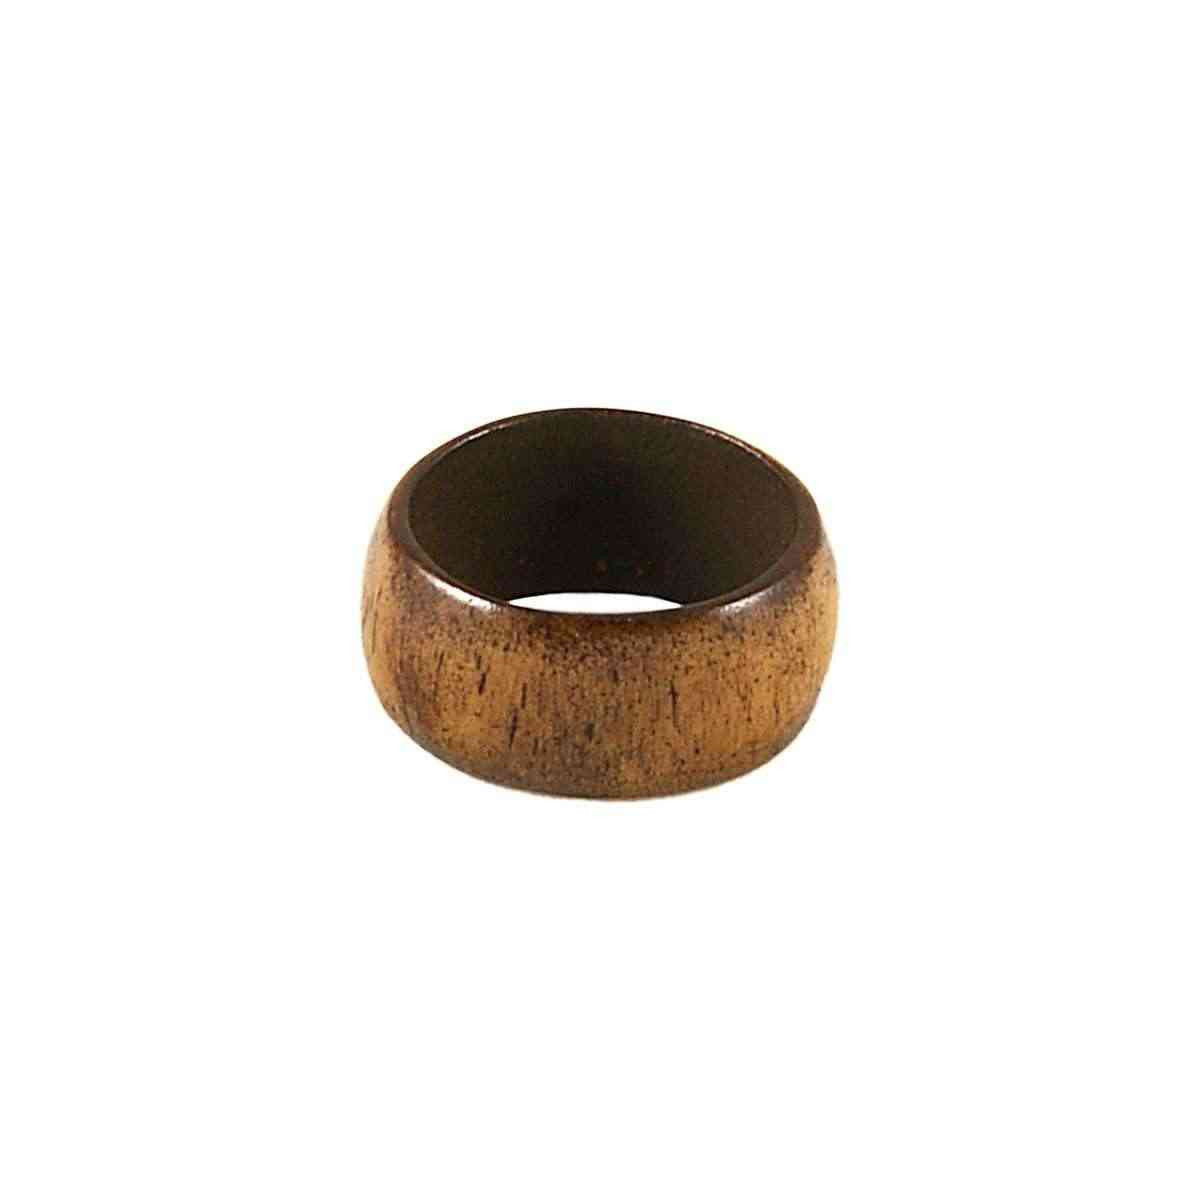 Nepalese Bone Ring